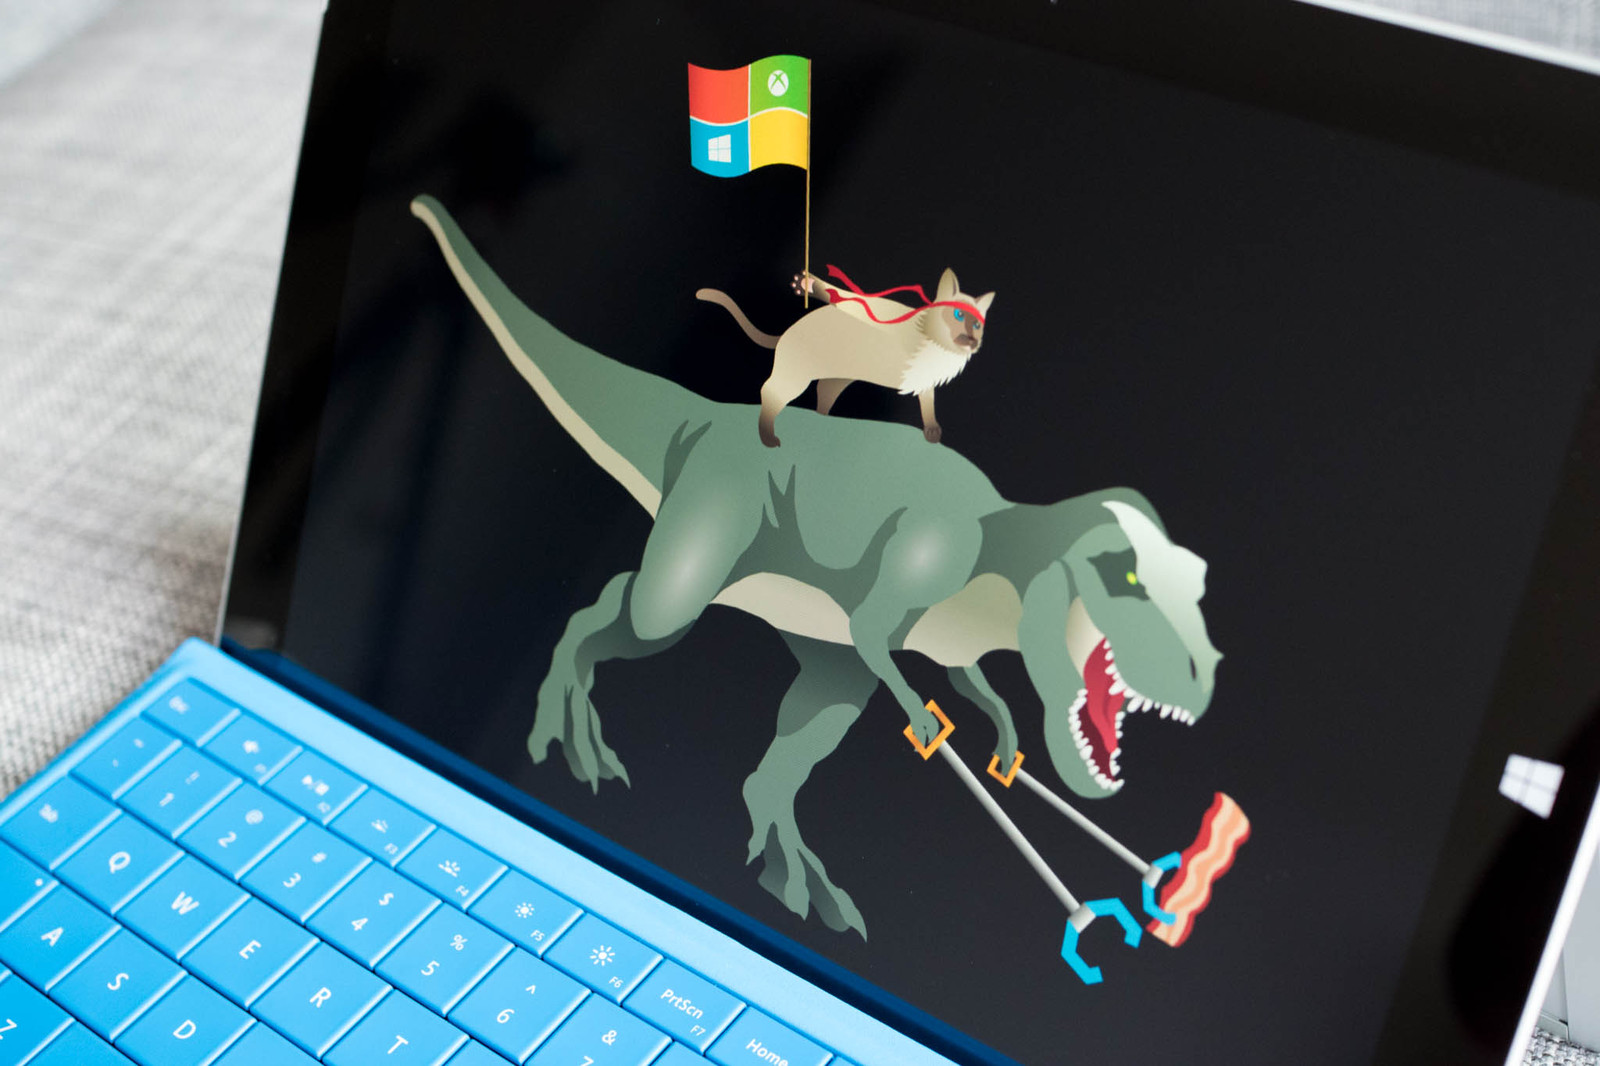 Windows S Launch In Skype With Ninja Cat Trex Emoticon